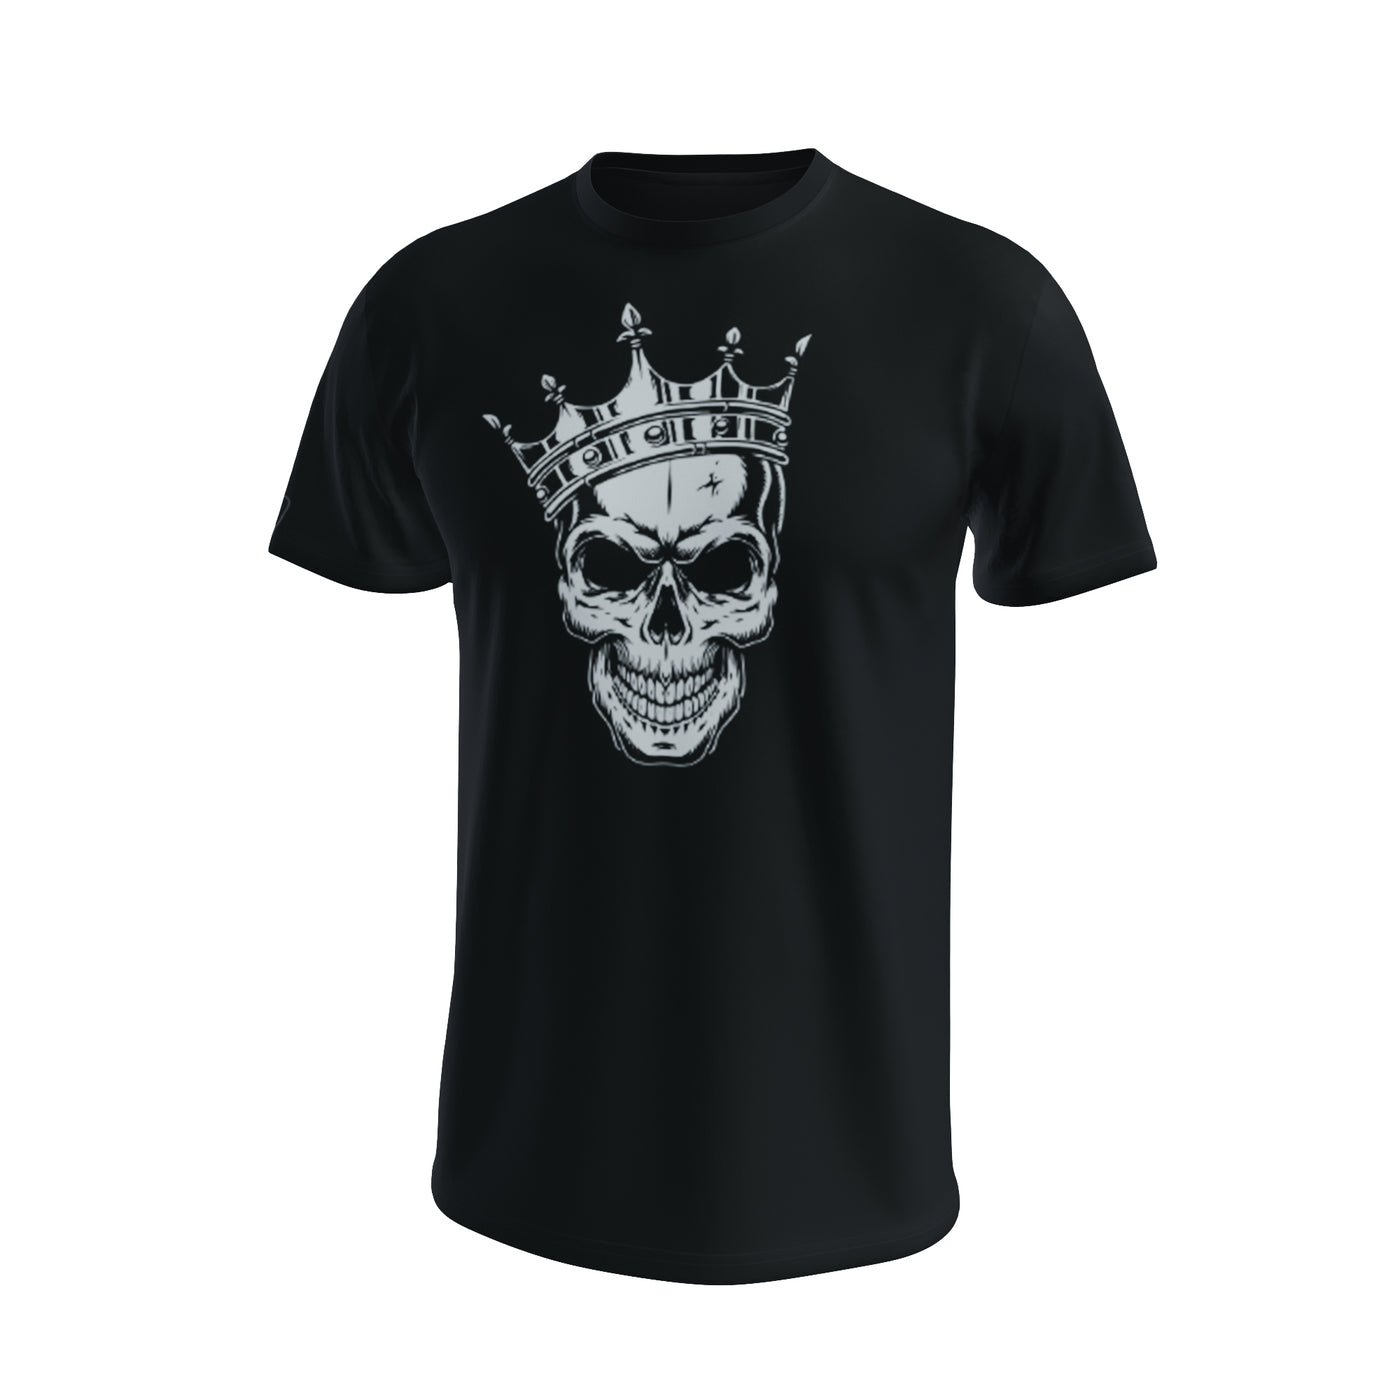 64 Degree Racing Skull T-Shirt